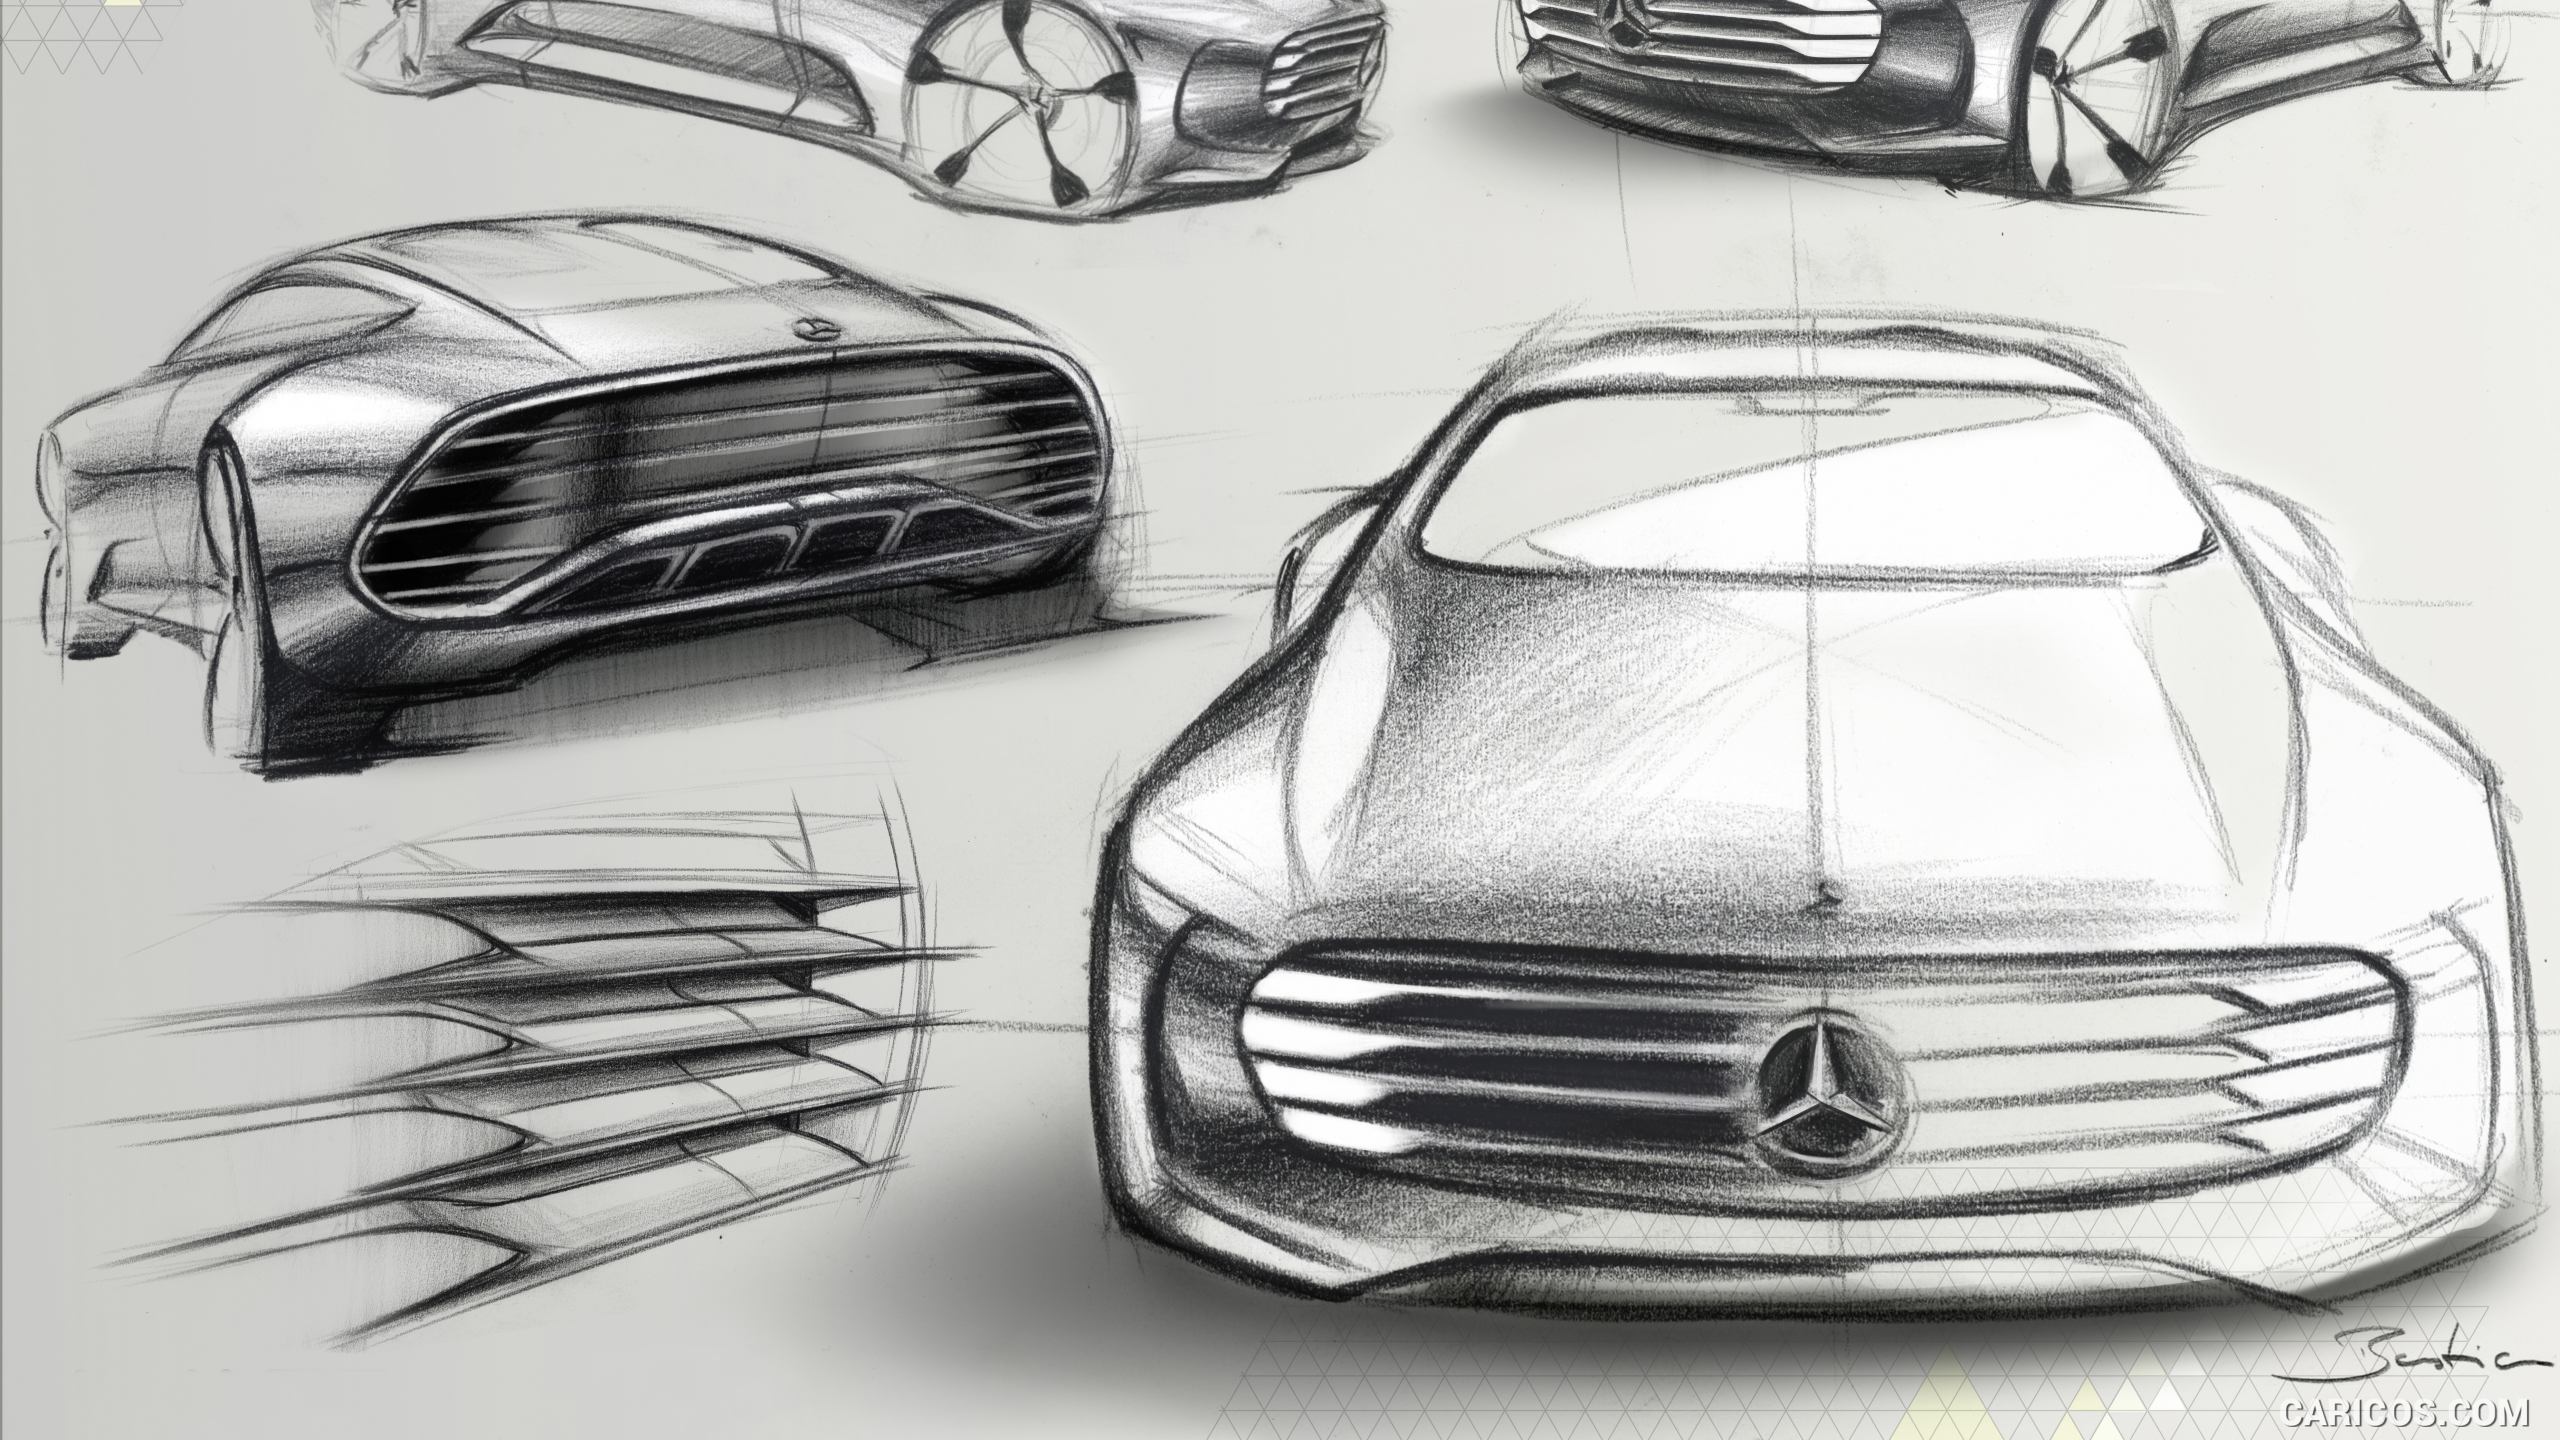 2015 Mercedes-Benz Concept IAA (Intelligent Aerodynamic Automobile) - Design Sketch, #46 of 49